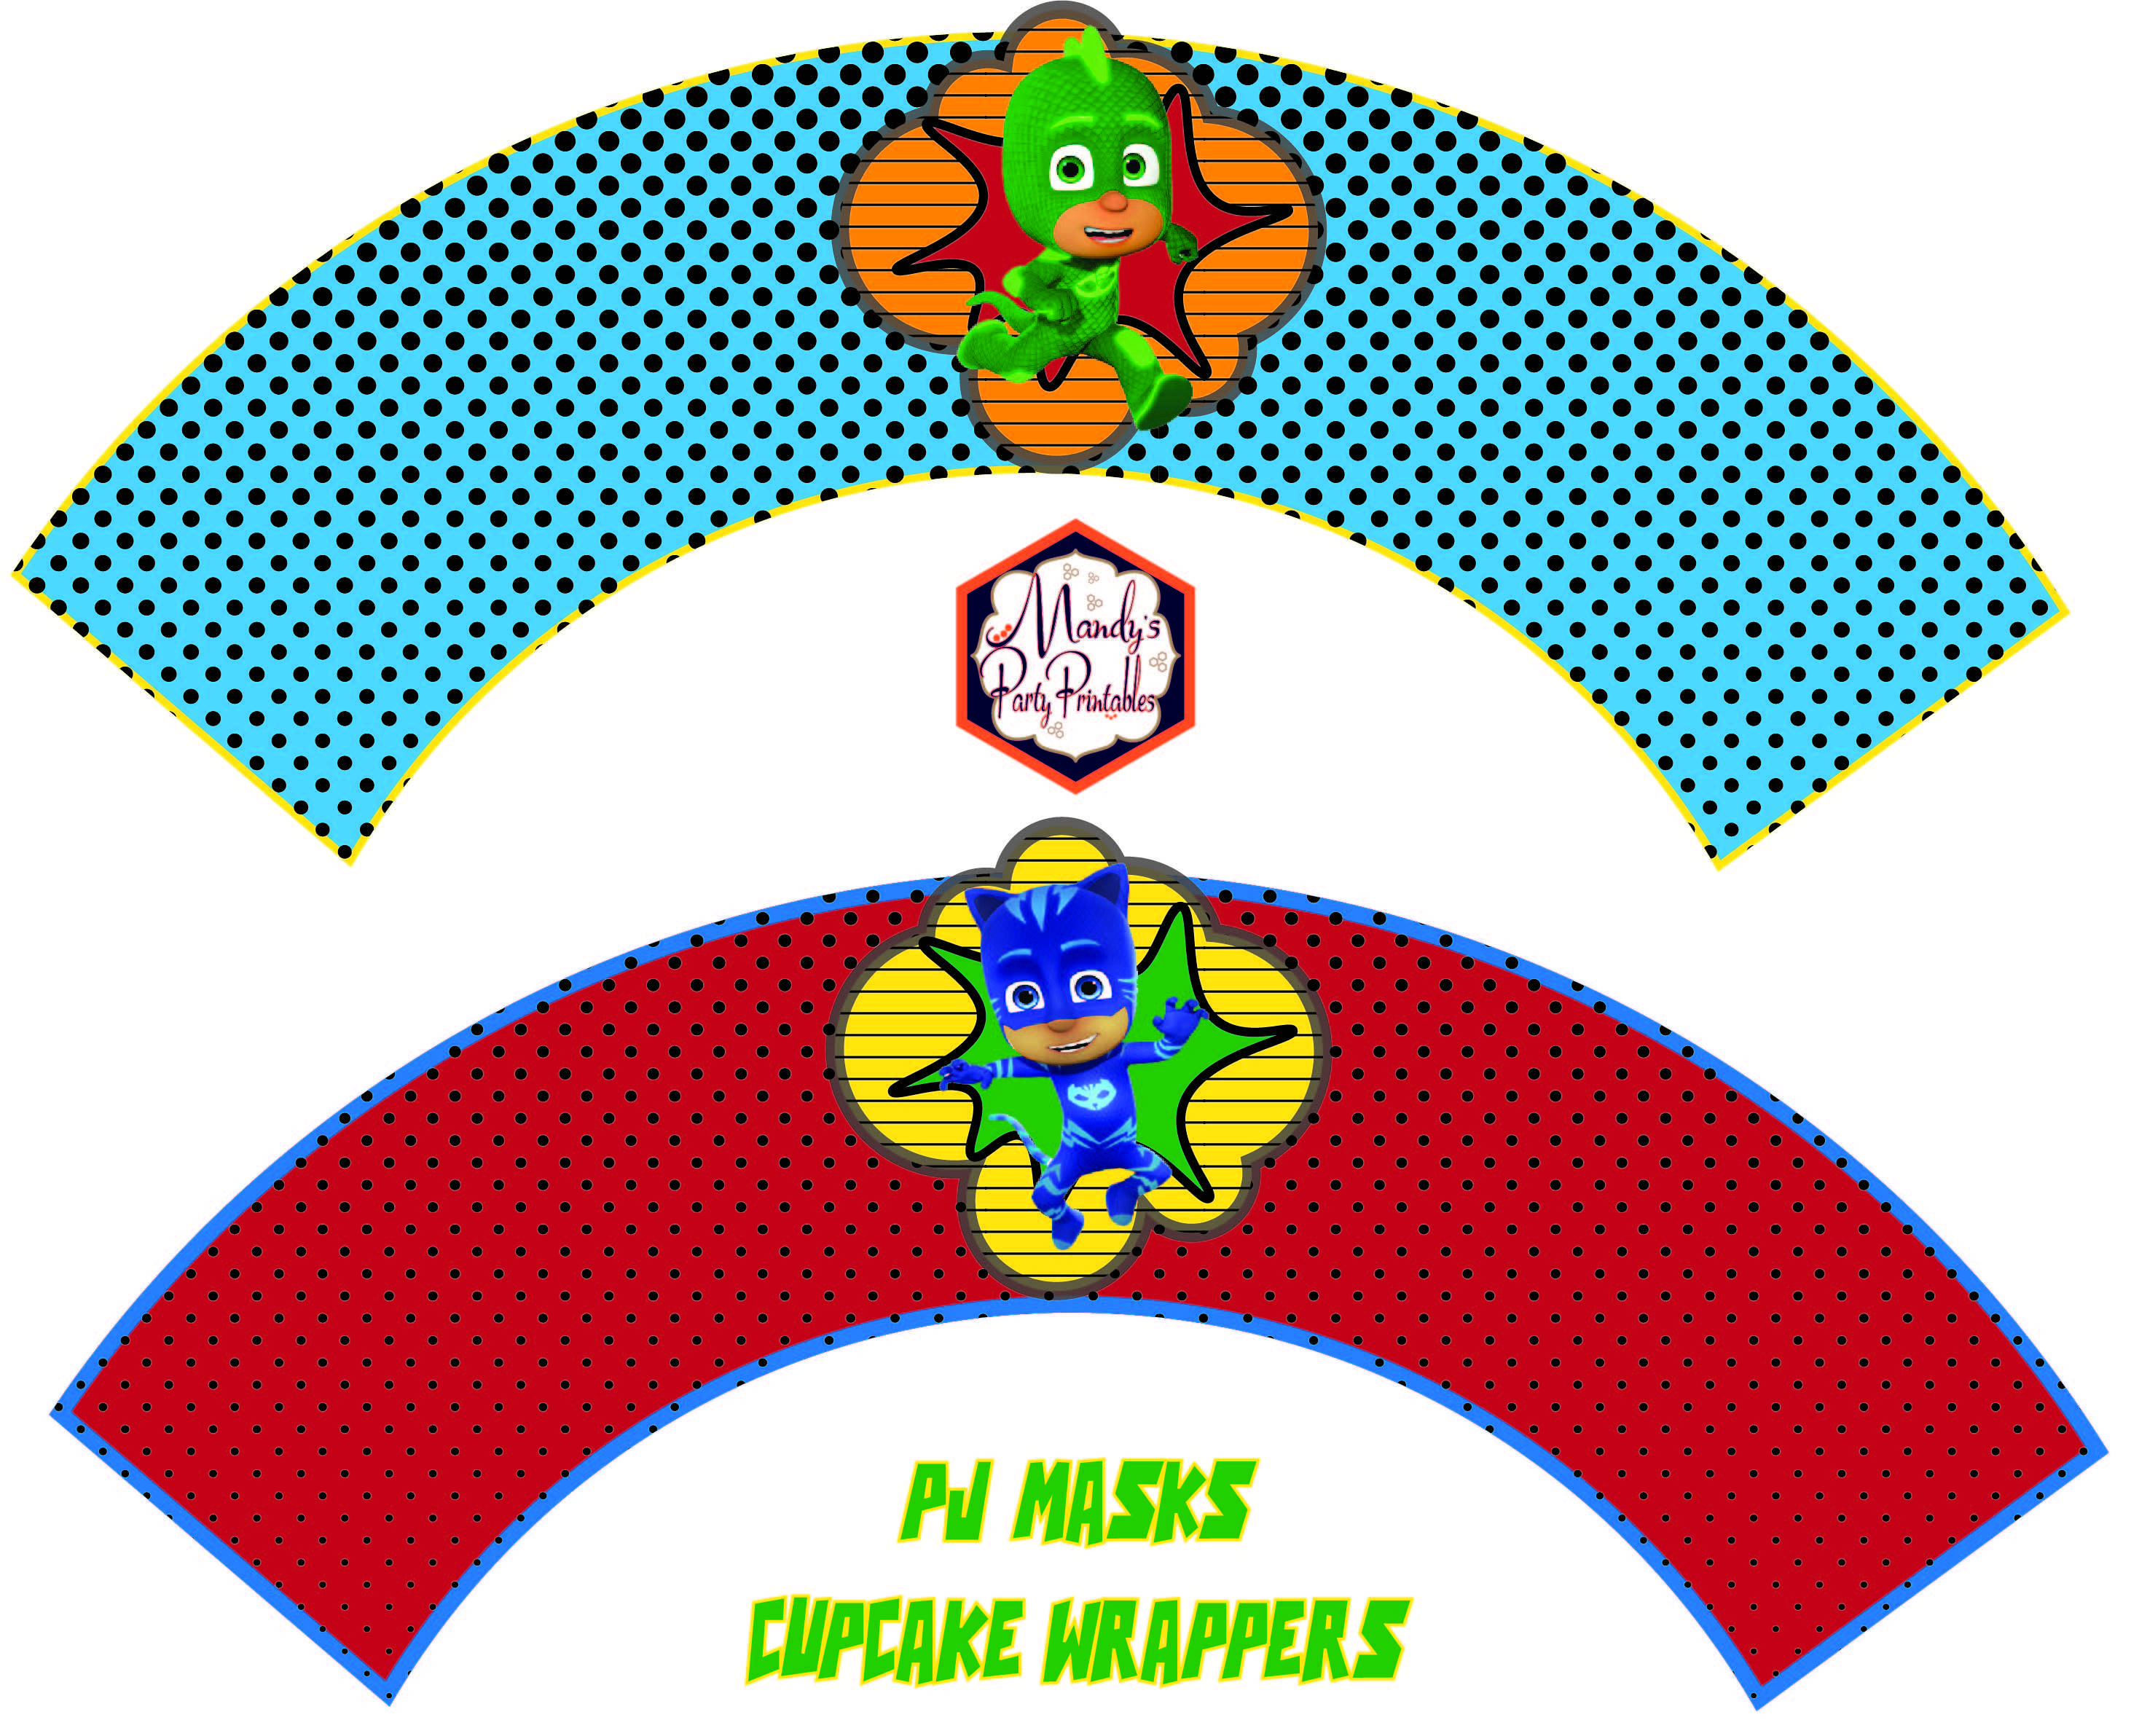 PJ-Masks-Cupcake-Wrappers